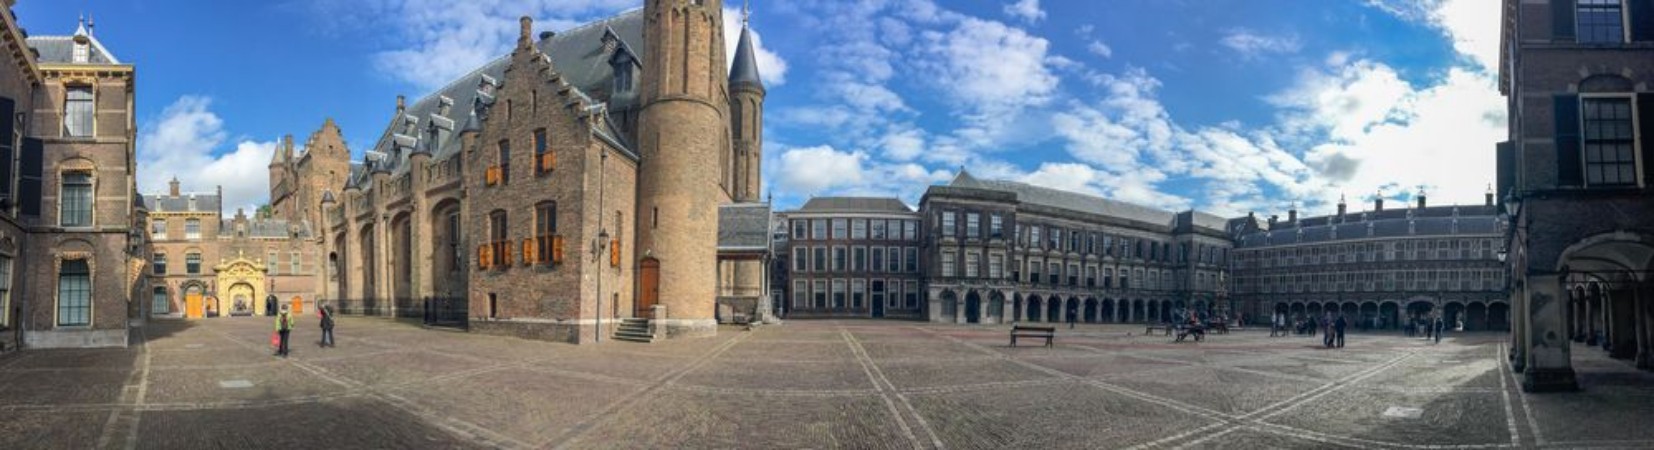 Picture of Binnenhof